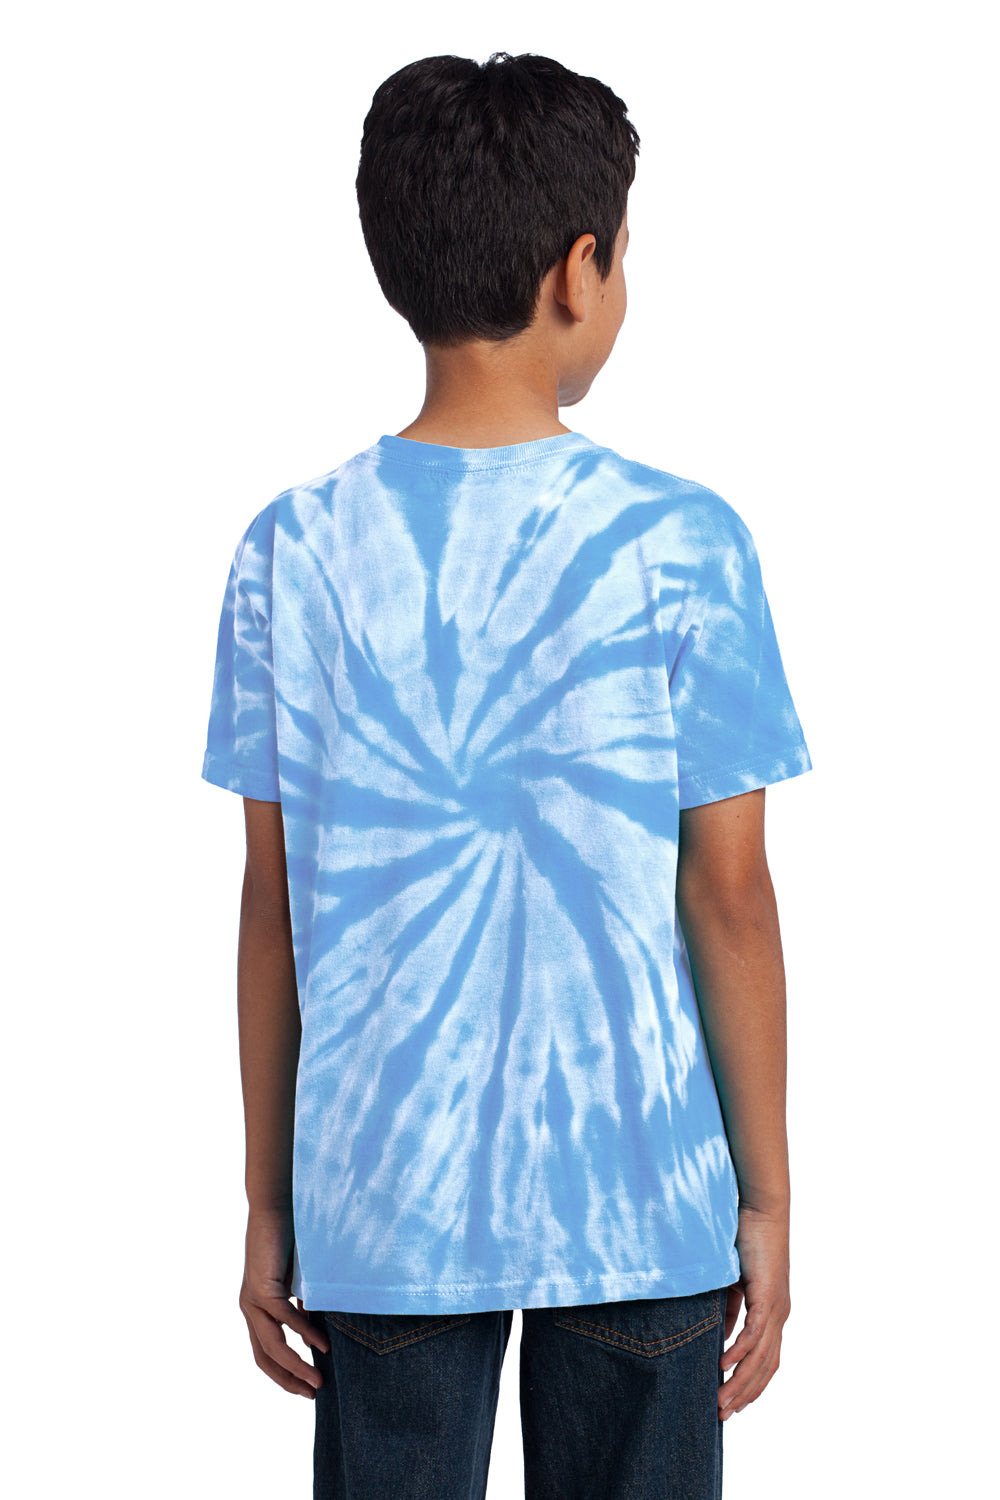 Port & Company PC147Y Youth Tie-Dye Short Sleeve Crewneck T-Shirt Light Blue Back